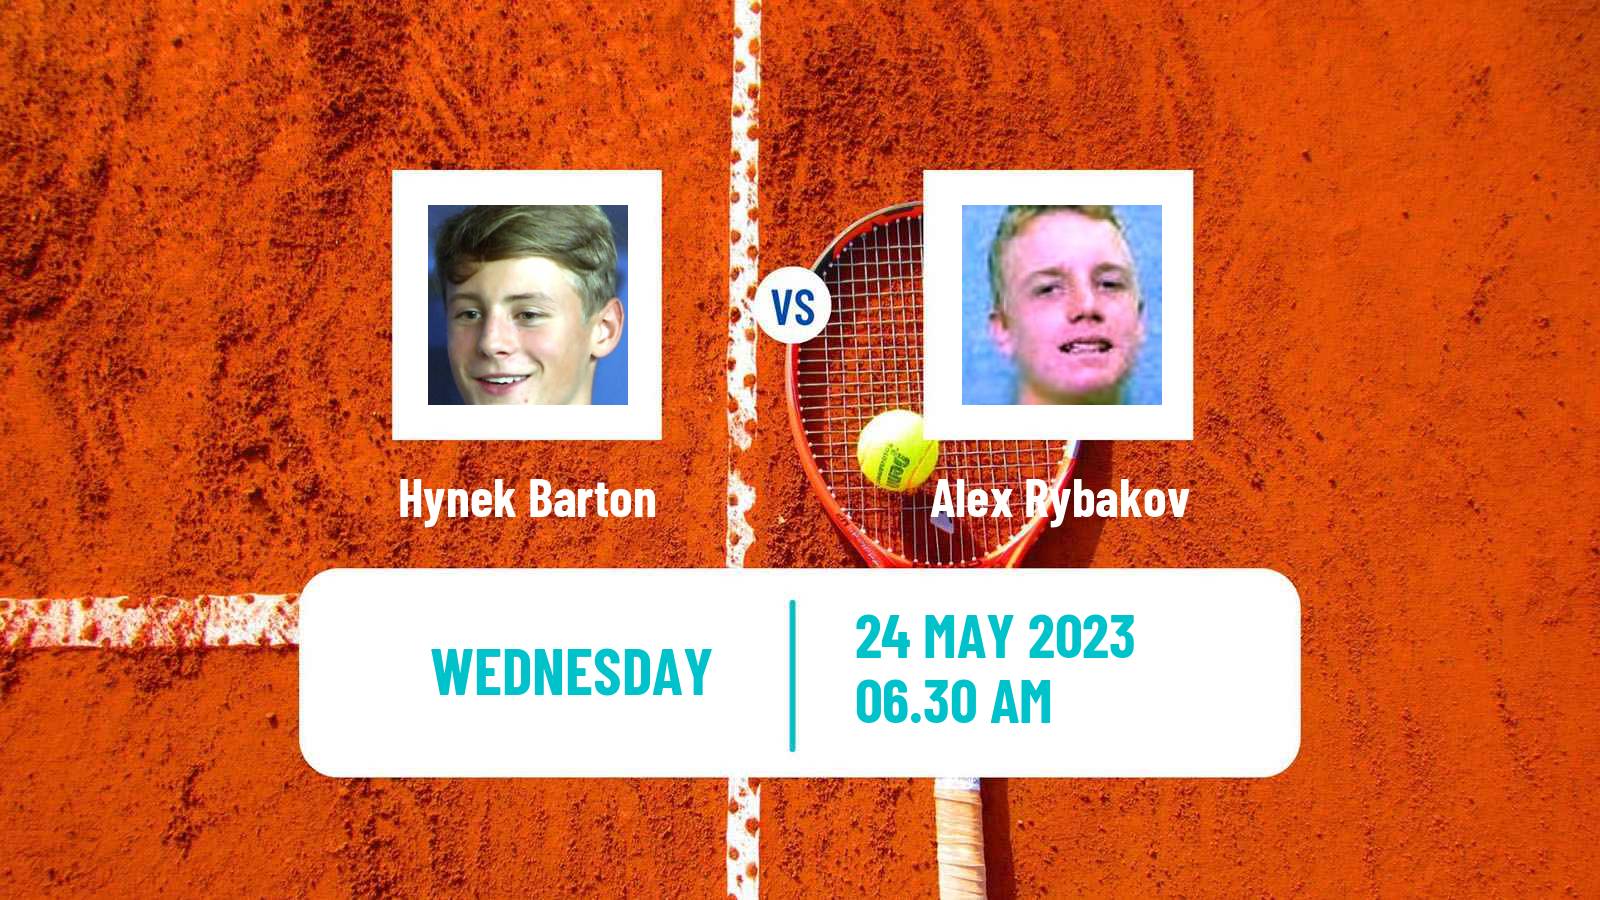 Tennis ITF M25 Most Men Hynek Barton - Alex Rybakov